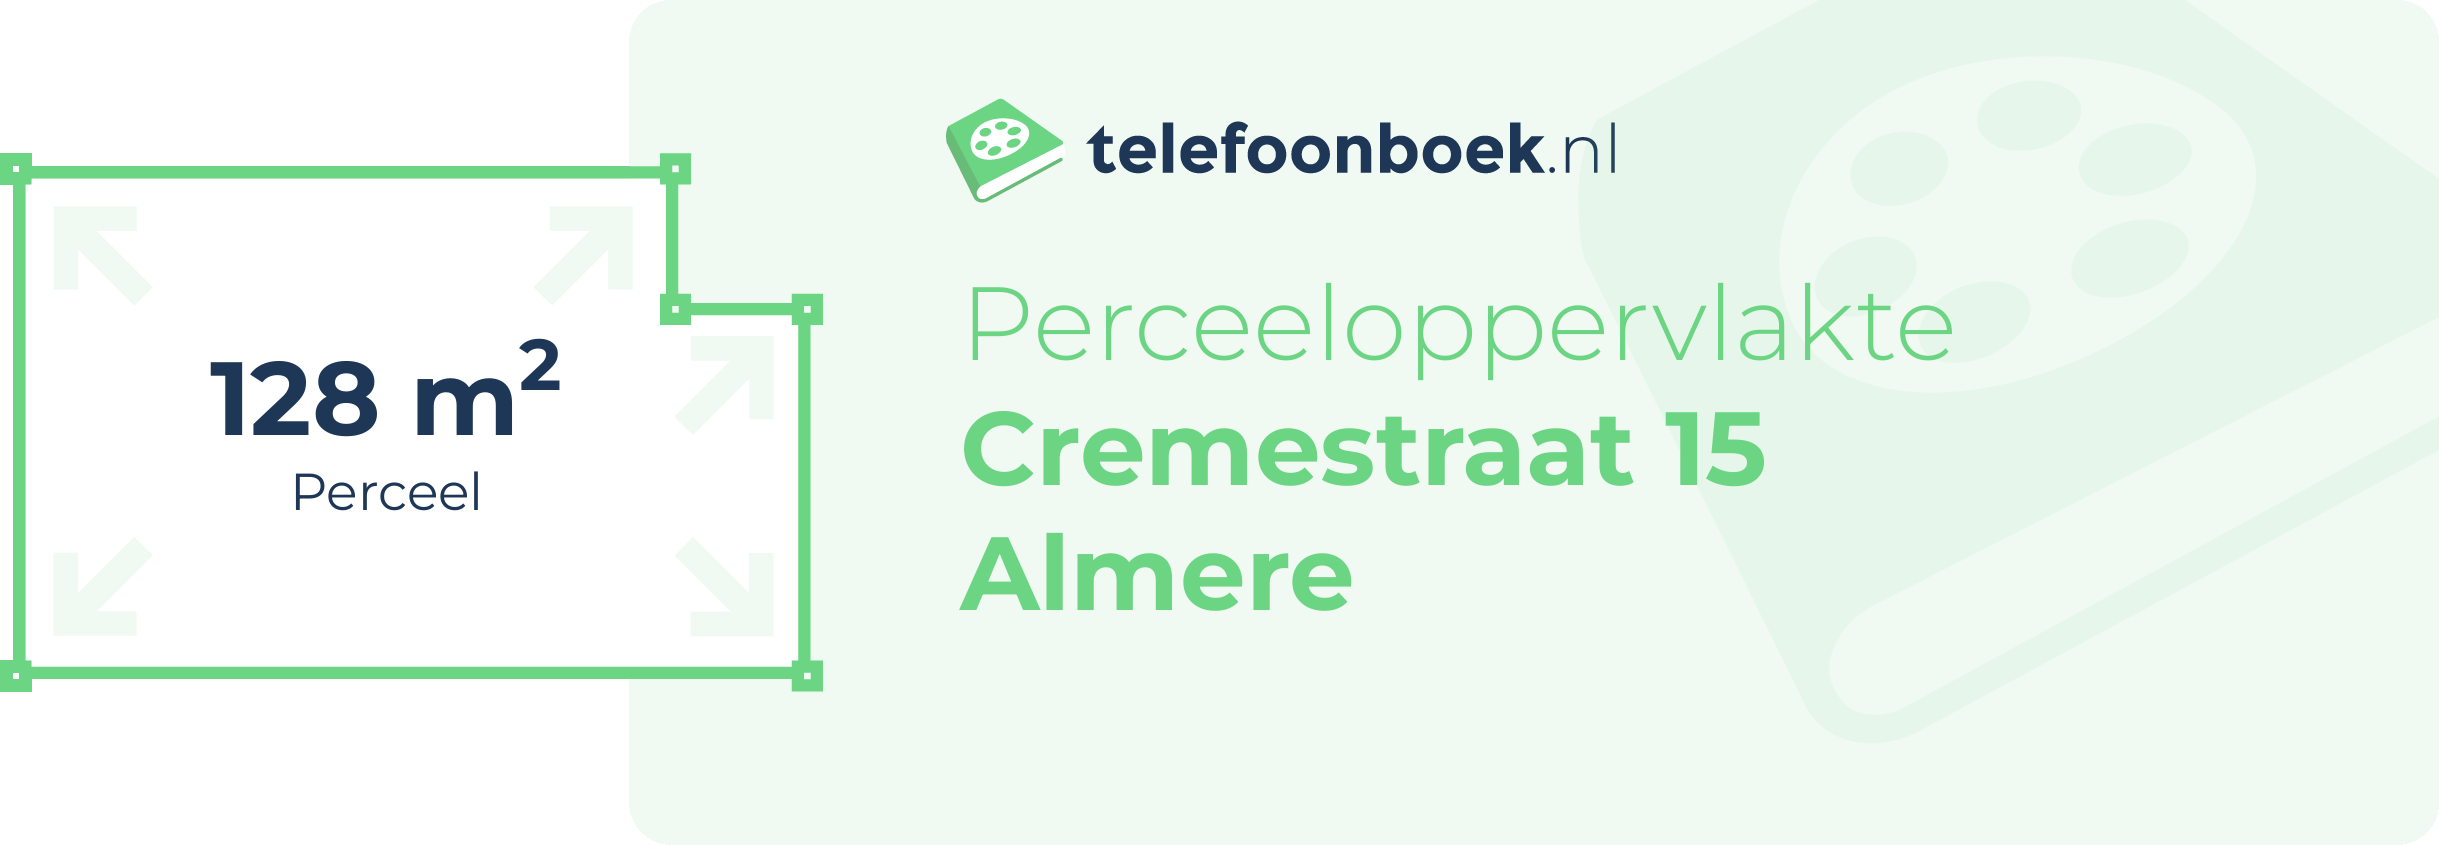 Perceeloppervlakte Cremestraat 15 Almere